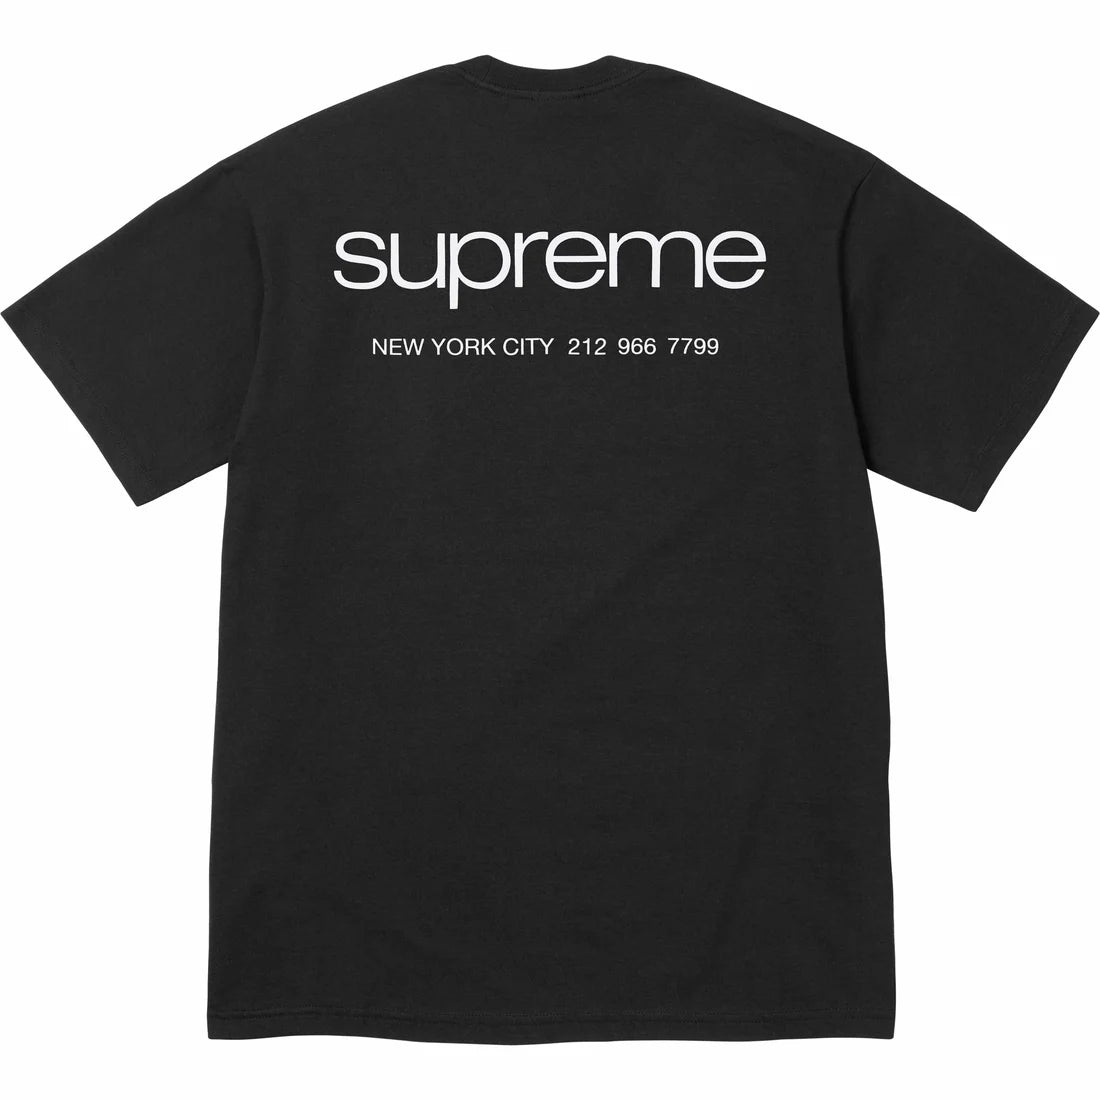 Supreme NYC Tee- Black